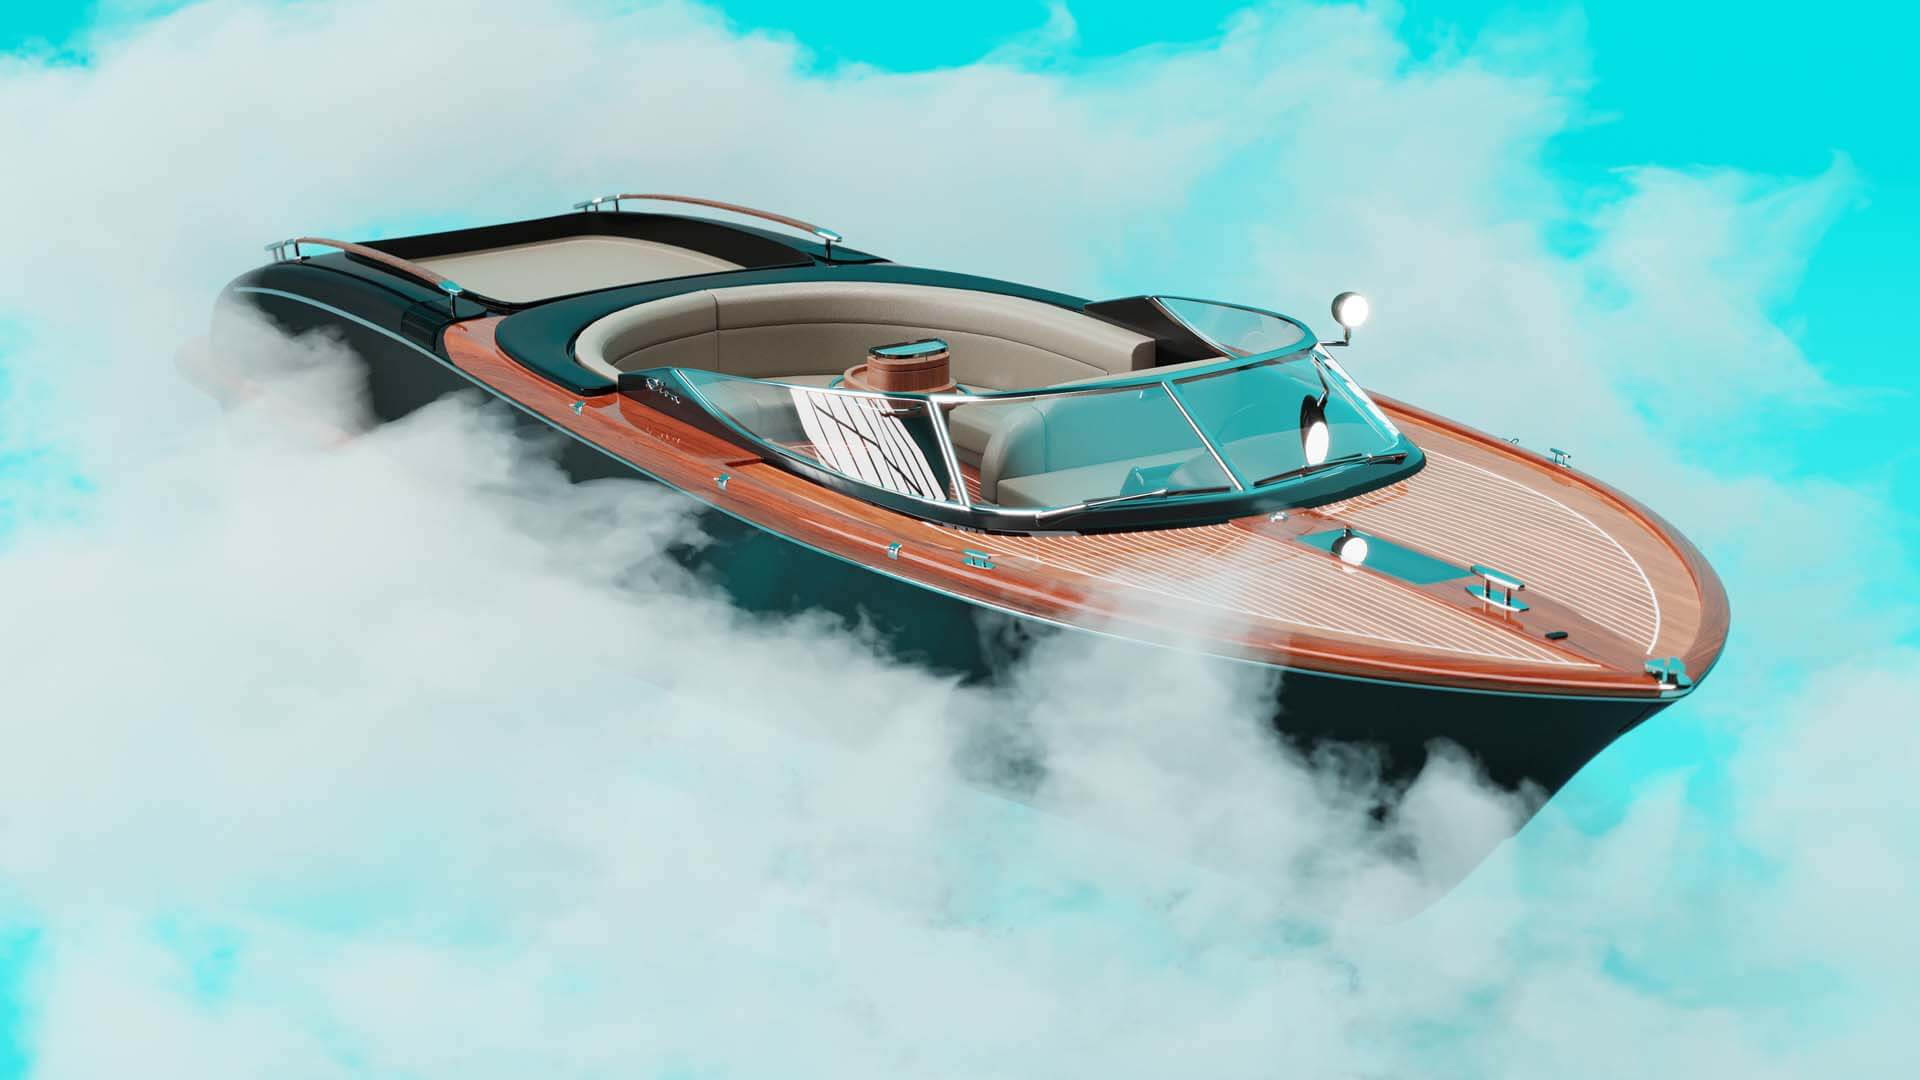 Riva Aquariva super yacht inside the abstract virtual space